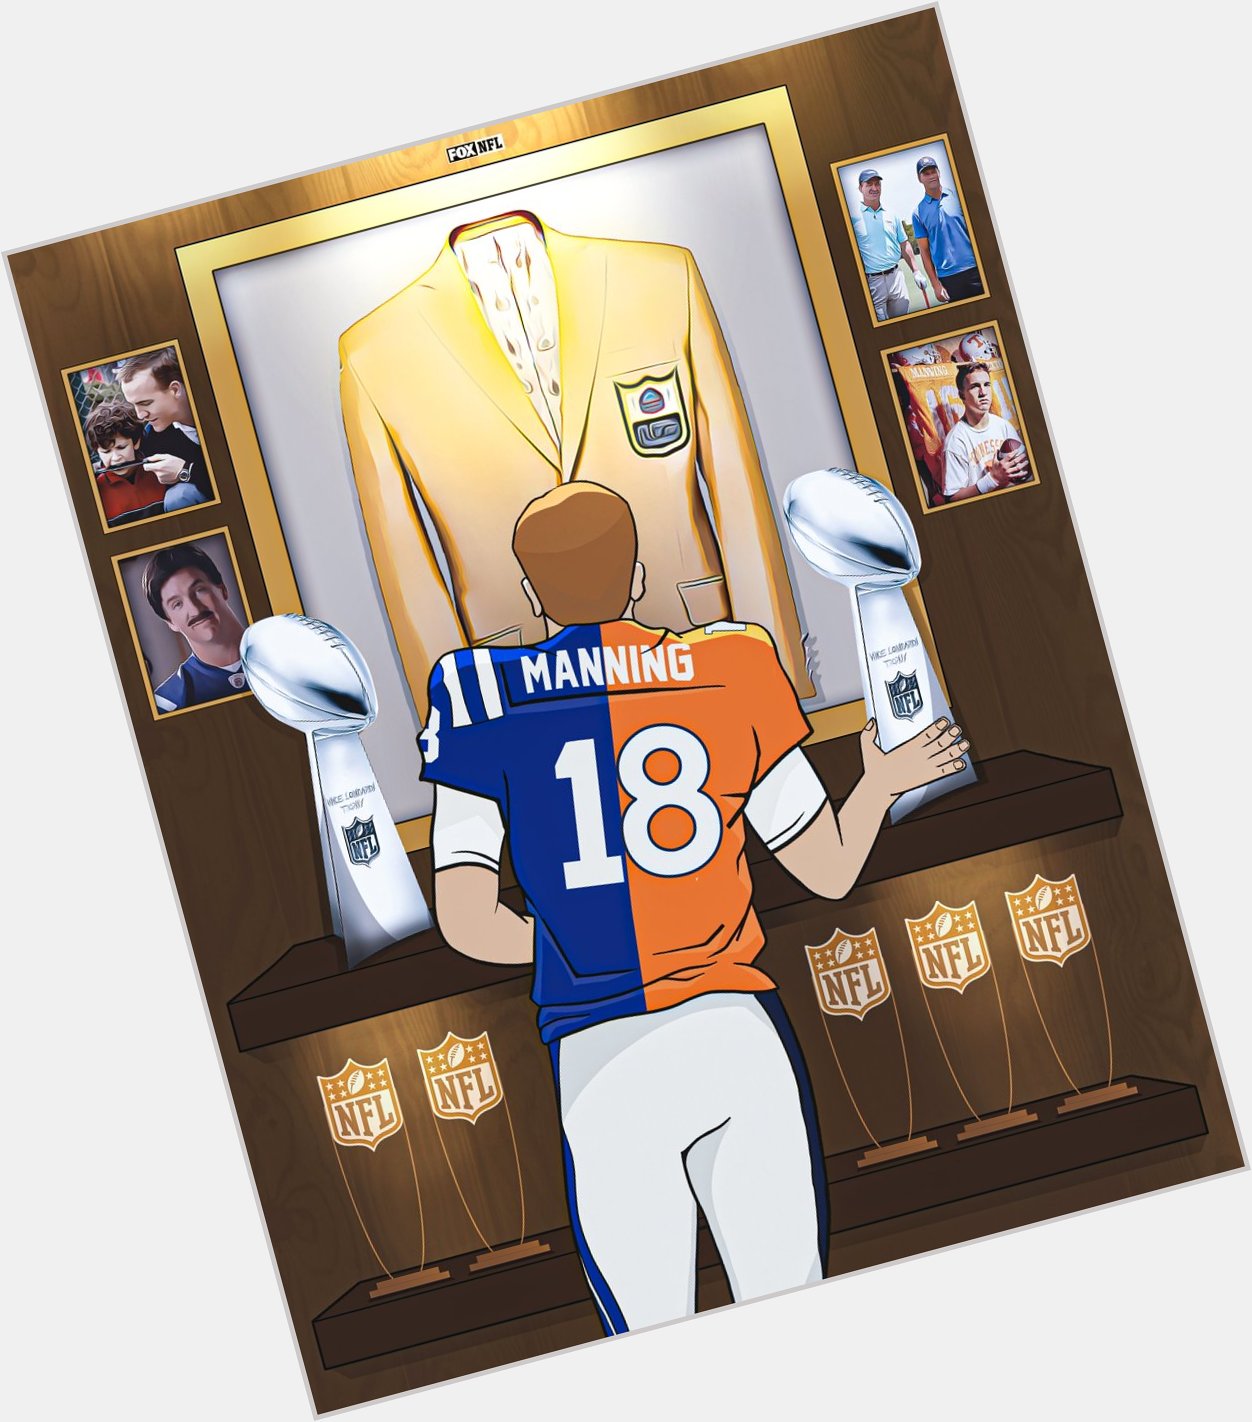 Hall of Famer.
14x Pro Bowler.
5x MVP.
2x champion.

Happy birthday, Peyton Manning!  